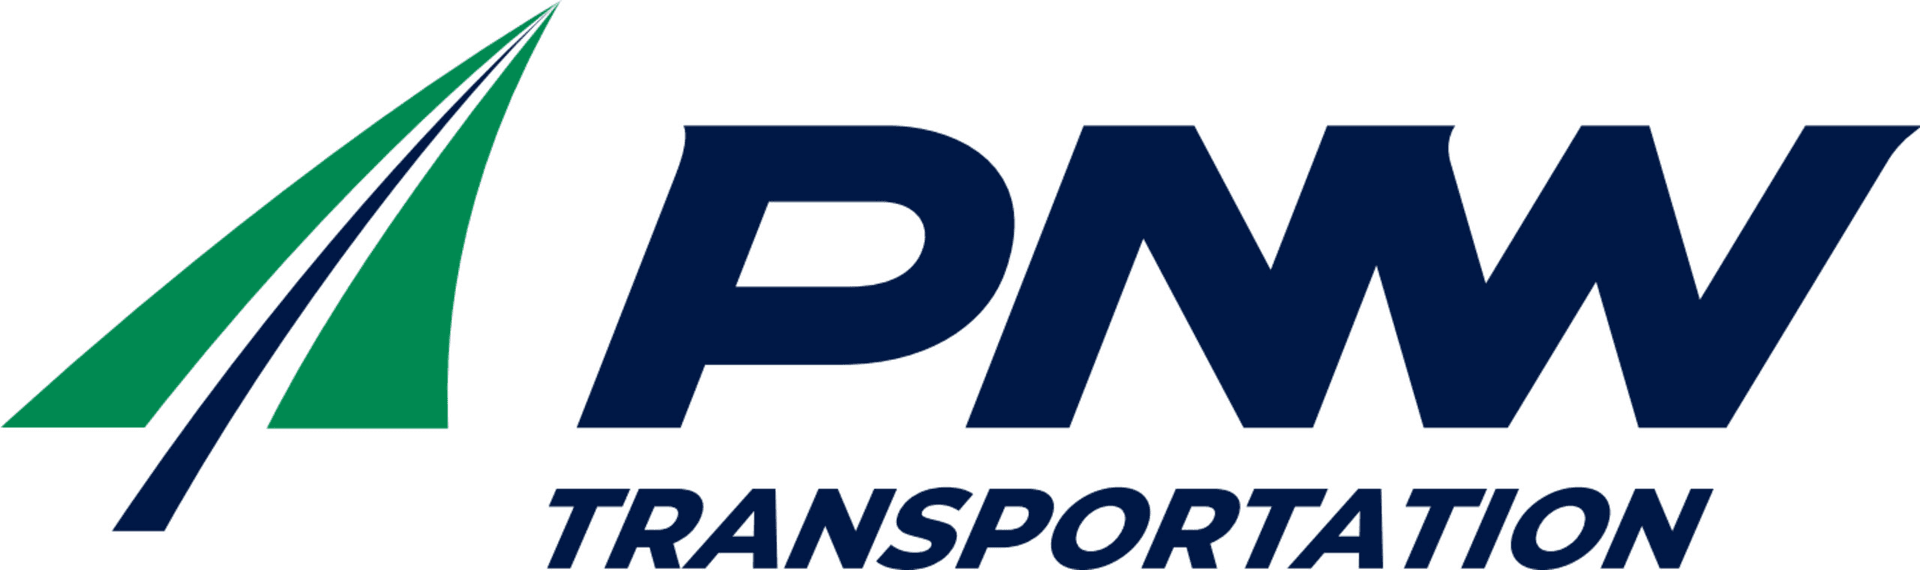 PNW transportation logo